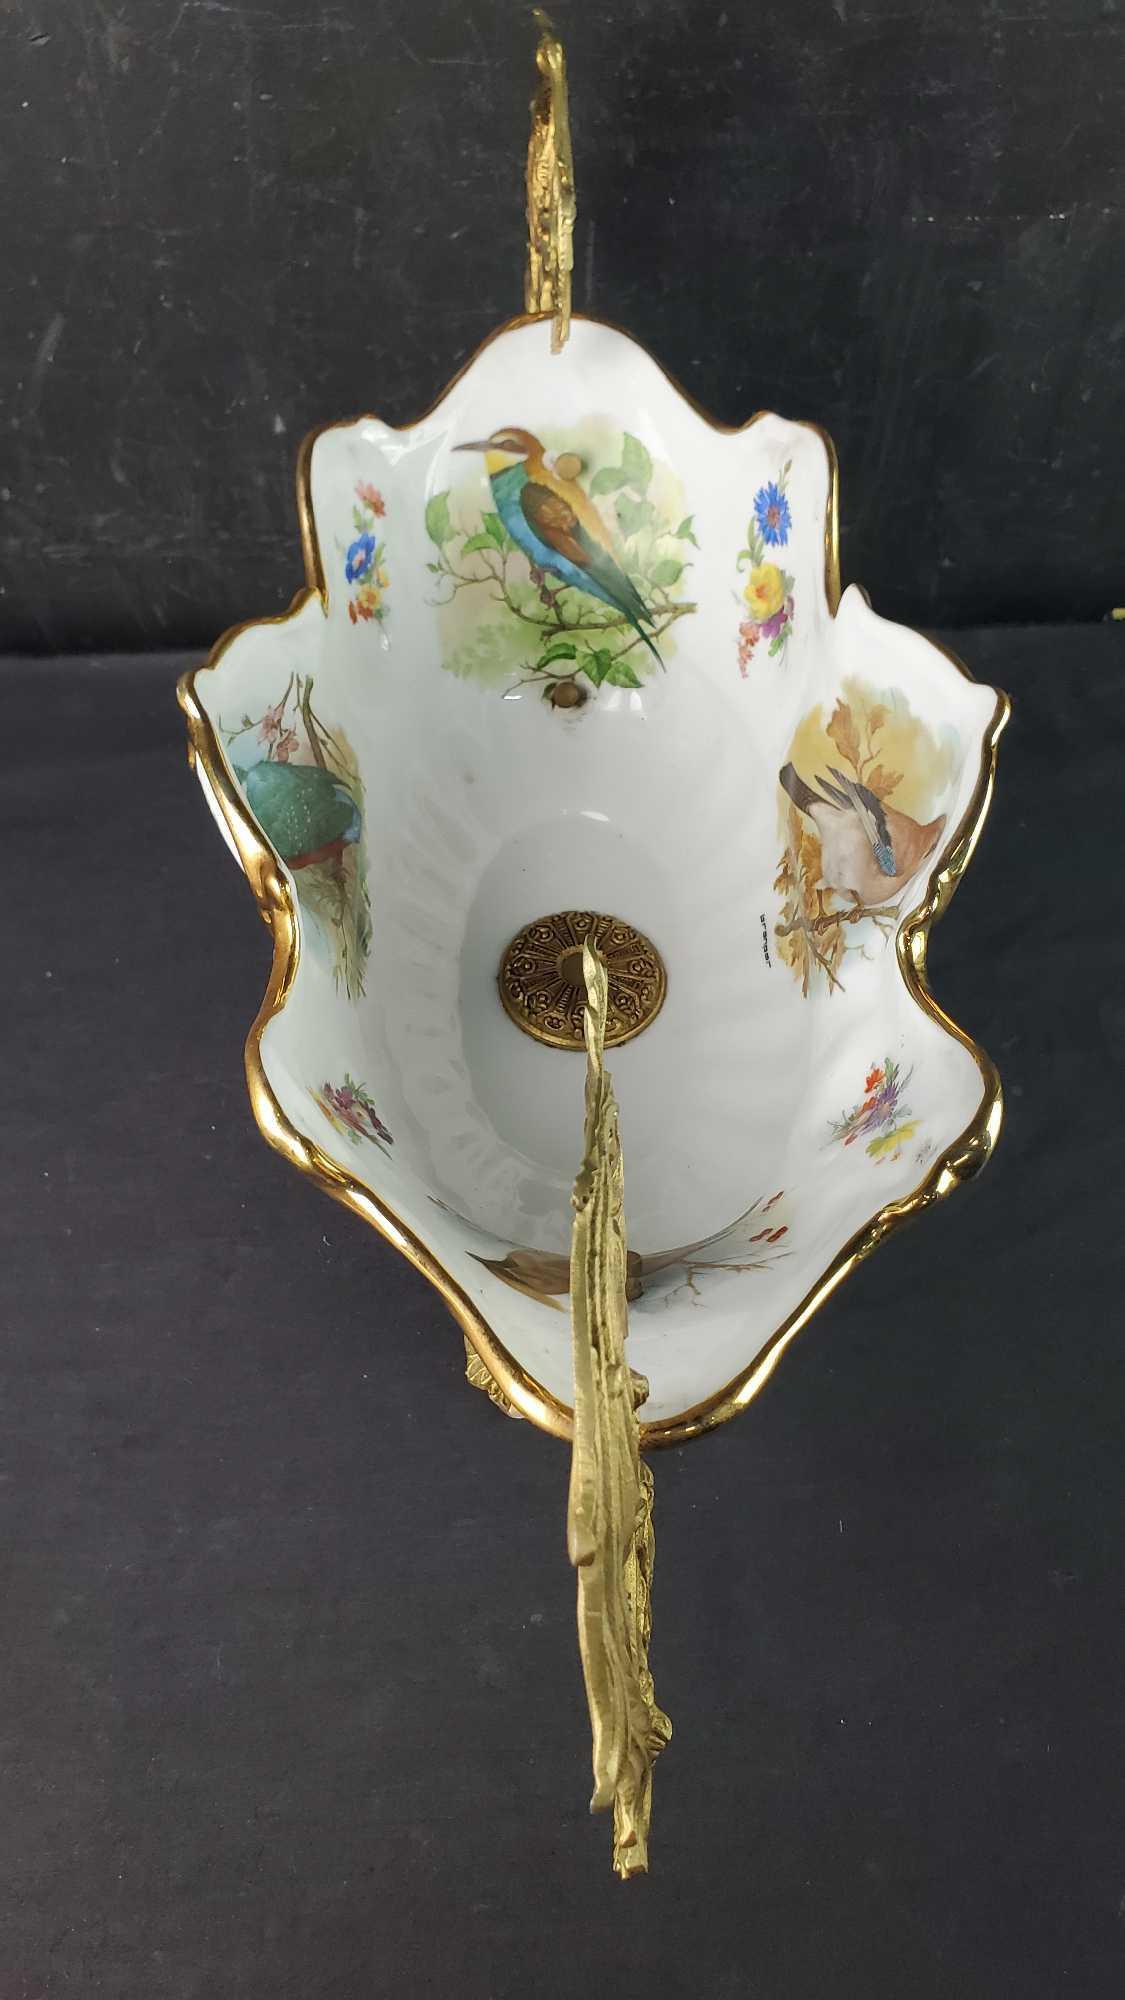 Vintage large fine porcelain bowl with gold rim depicting various birds with signature